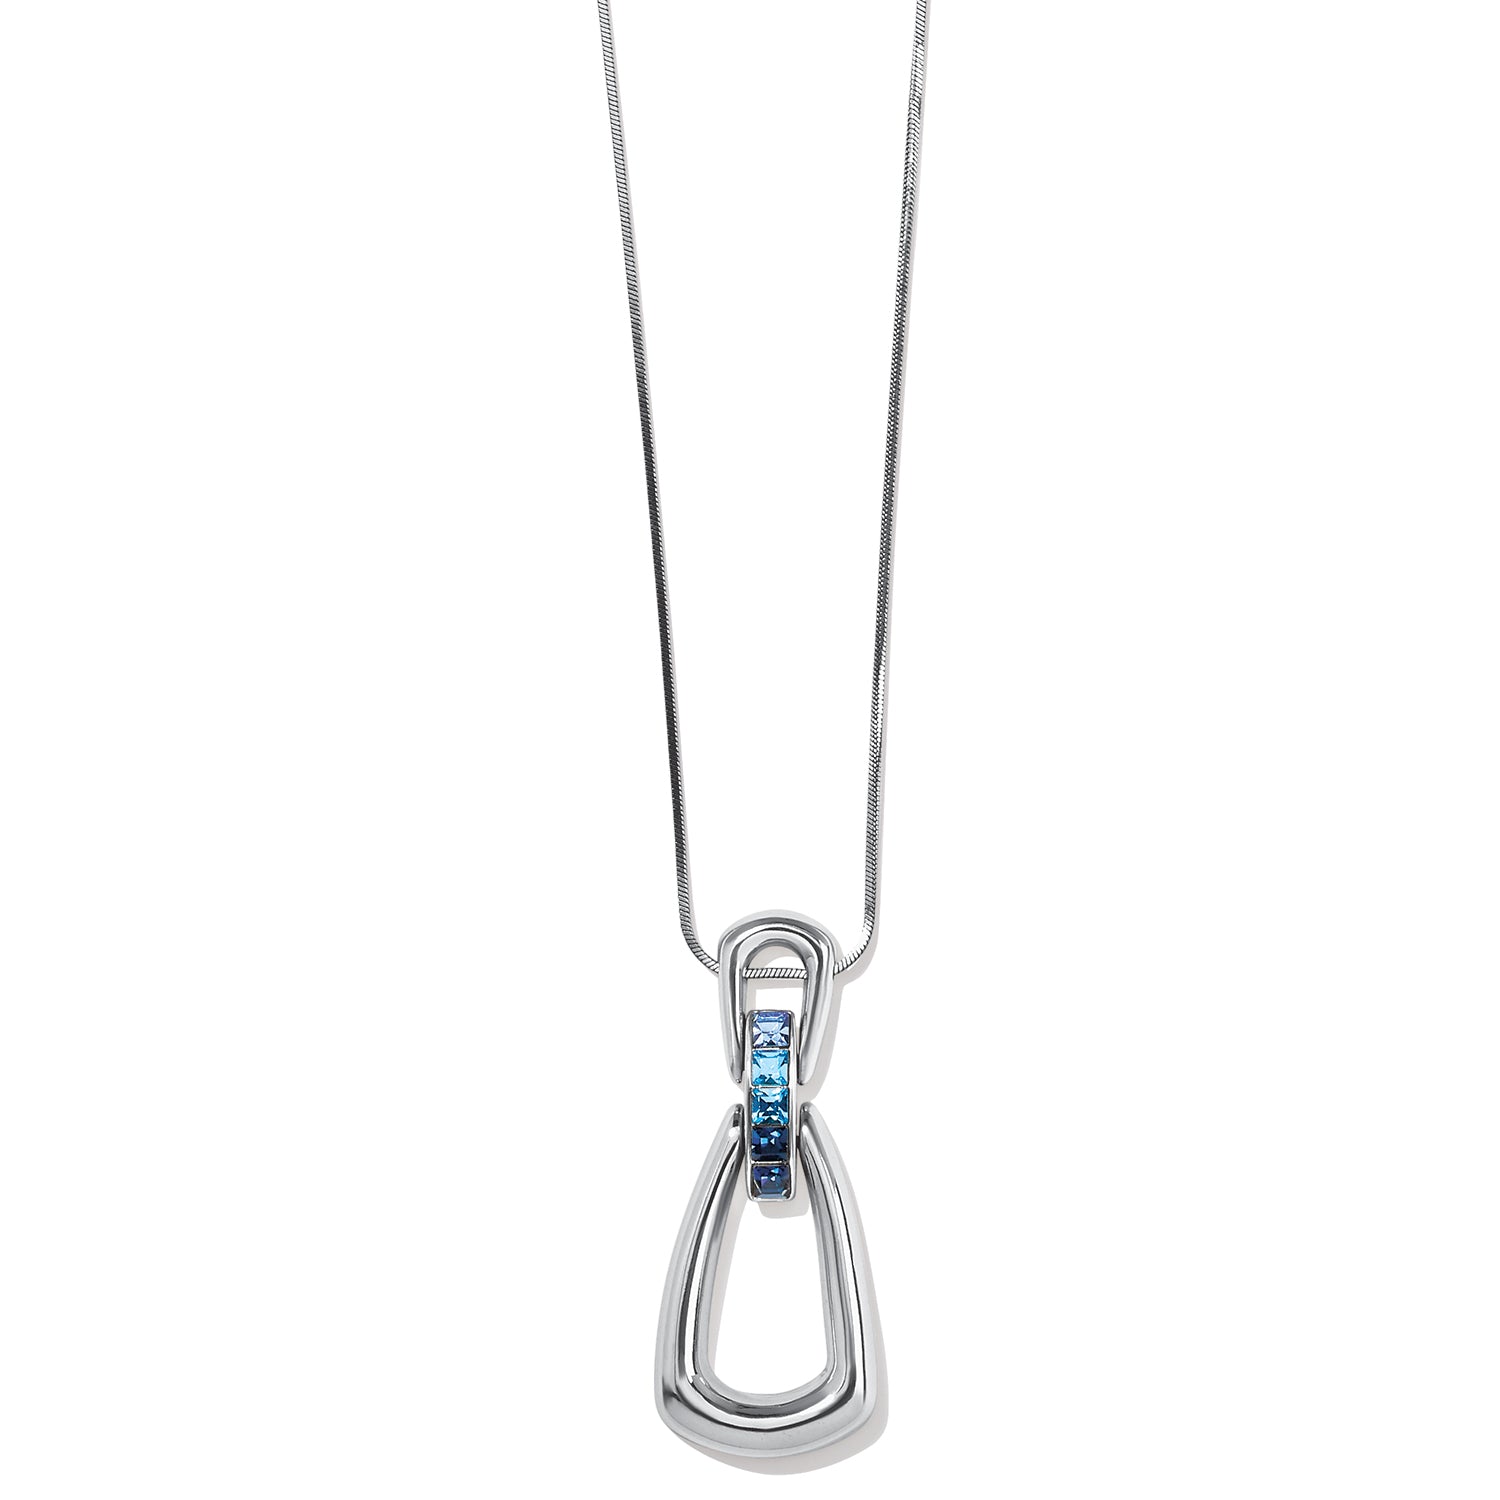 Spectrum Blue Loop Necklace